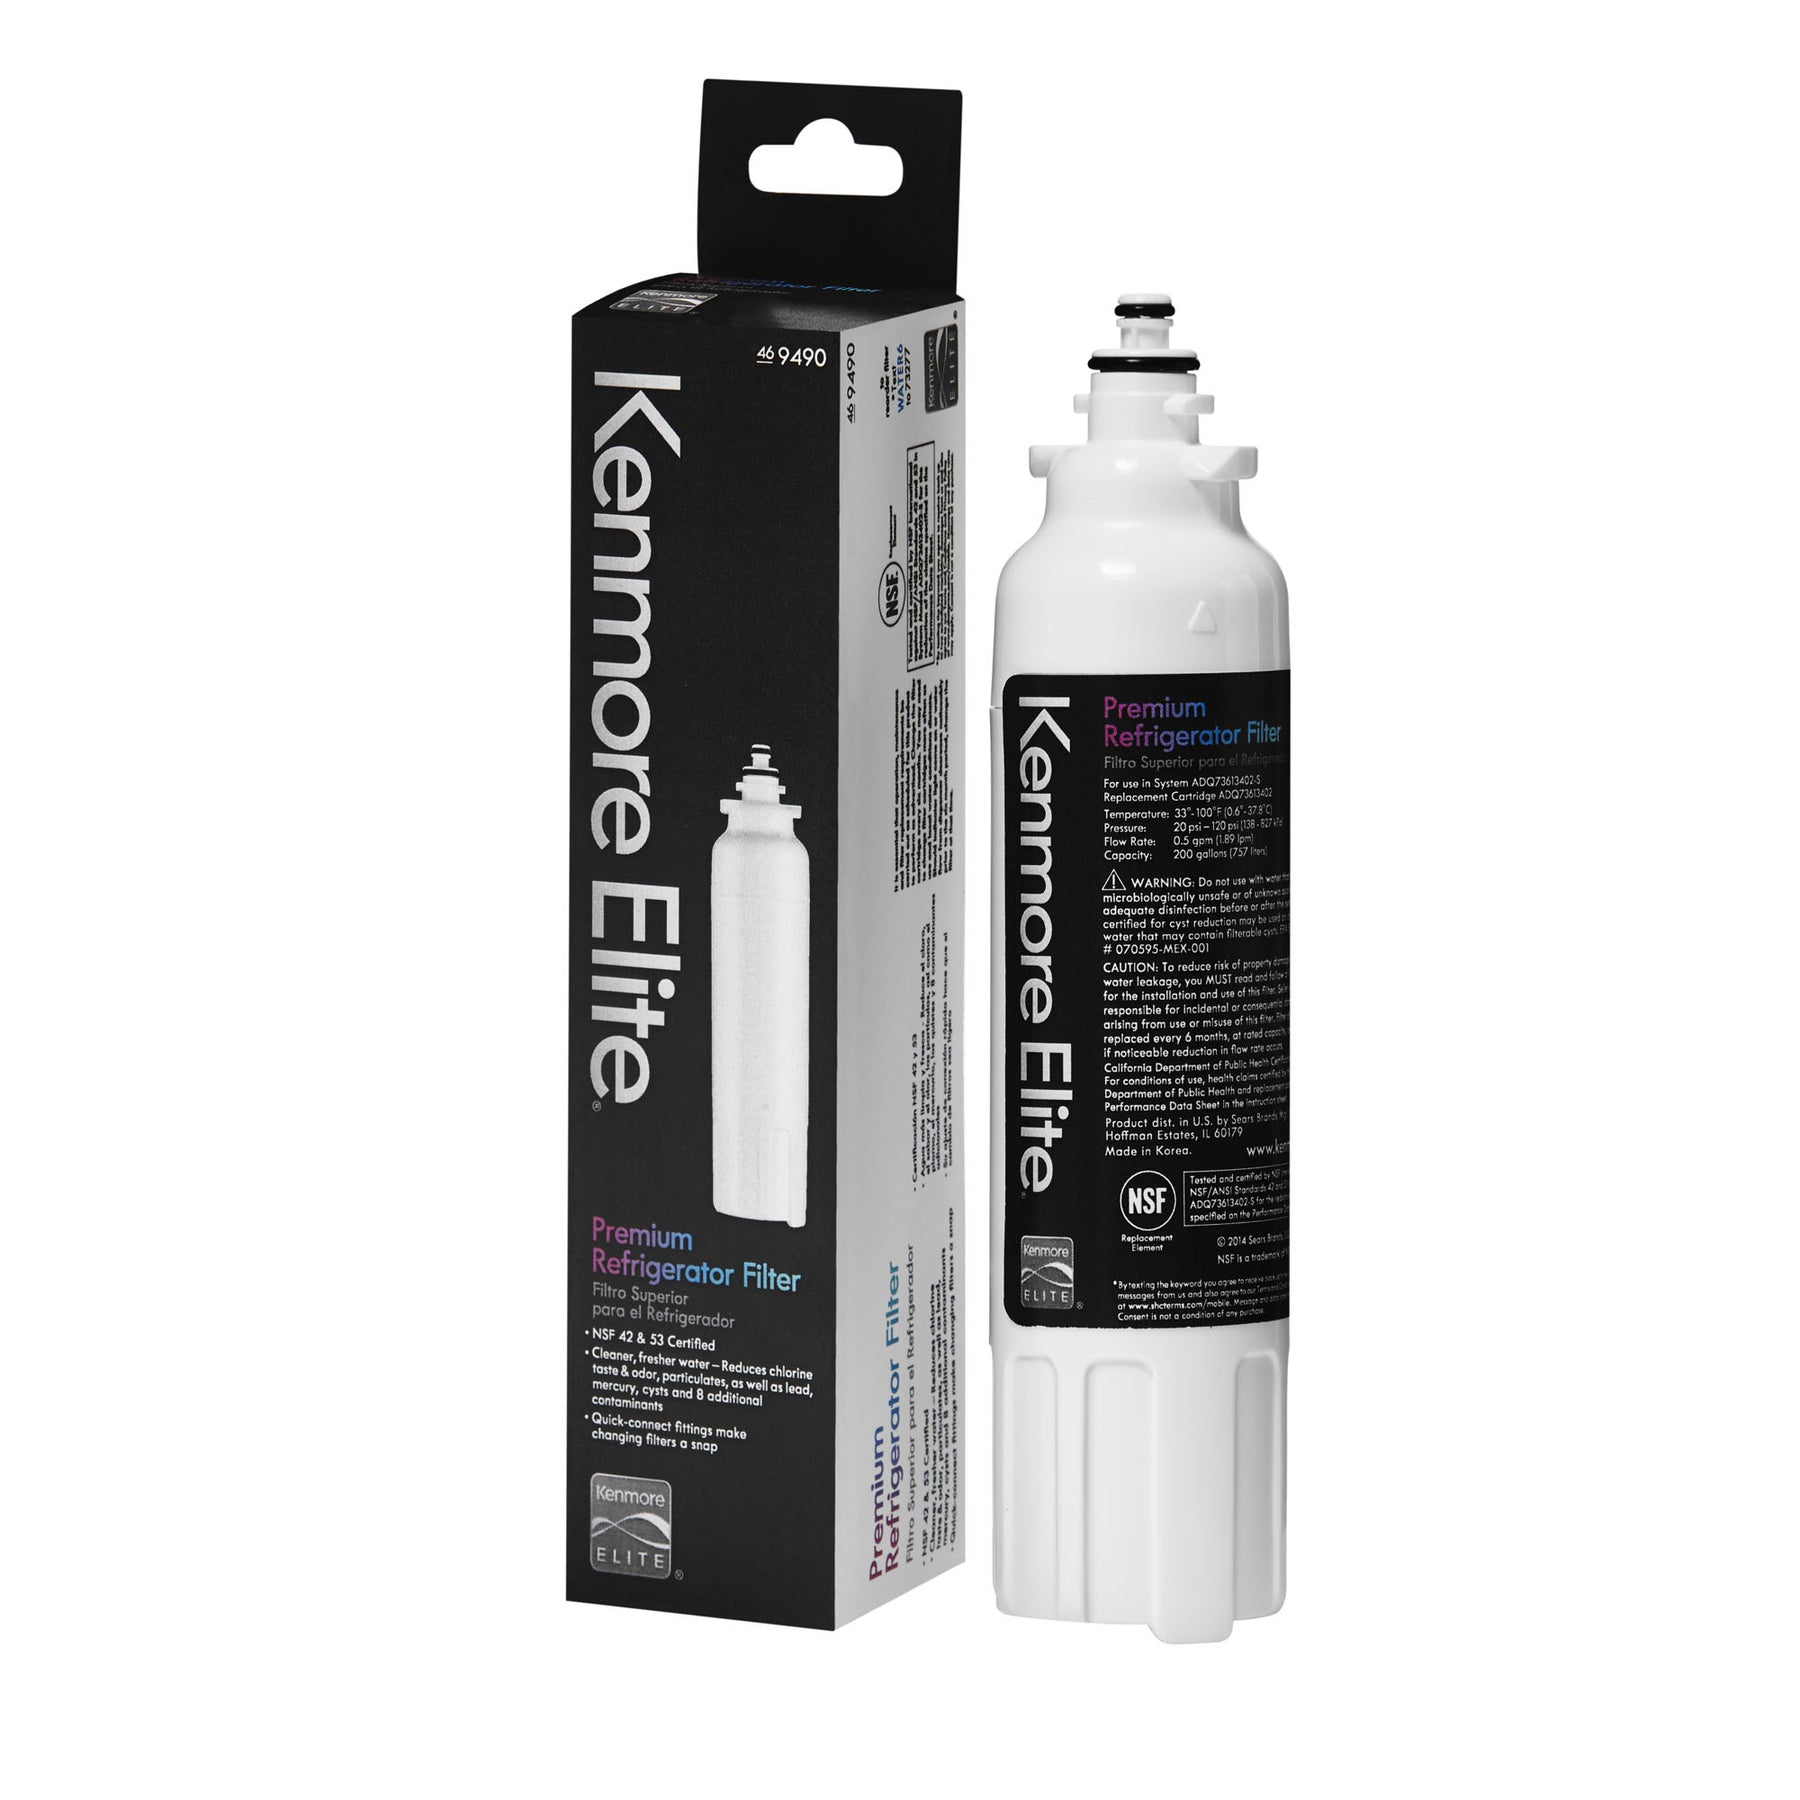 Kenmore 9490 Replacement Refrigerator Water Filter